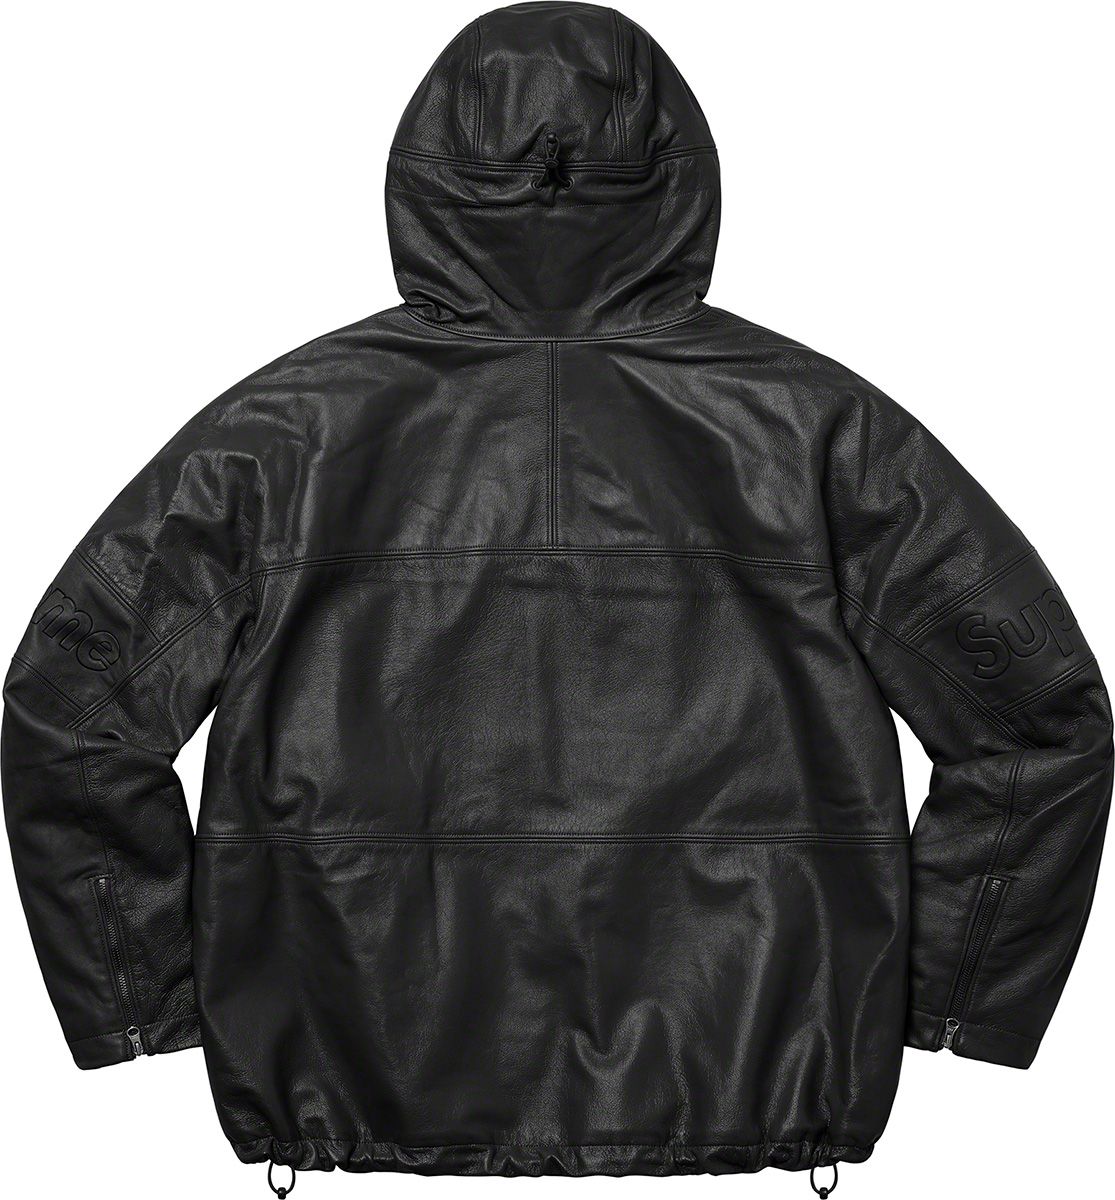 GORE-TEX Leather Jacket – Supreme